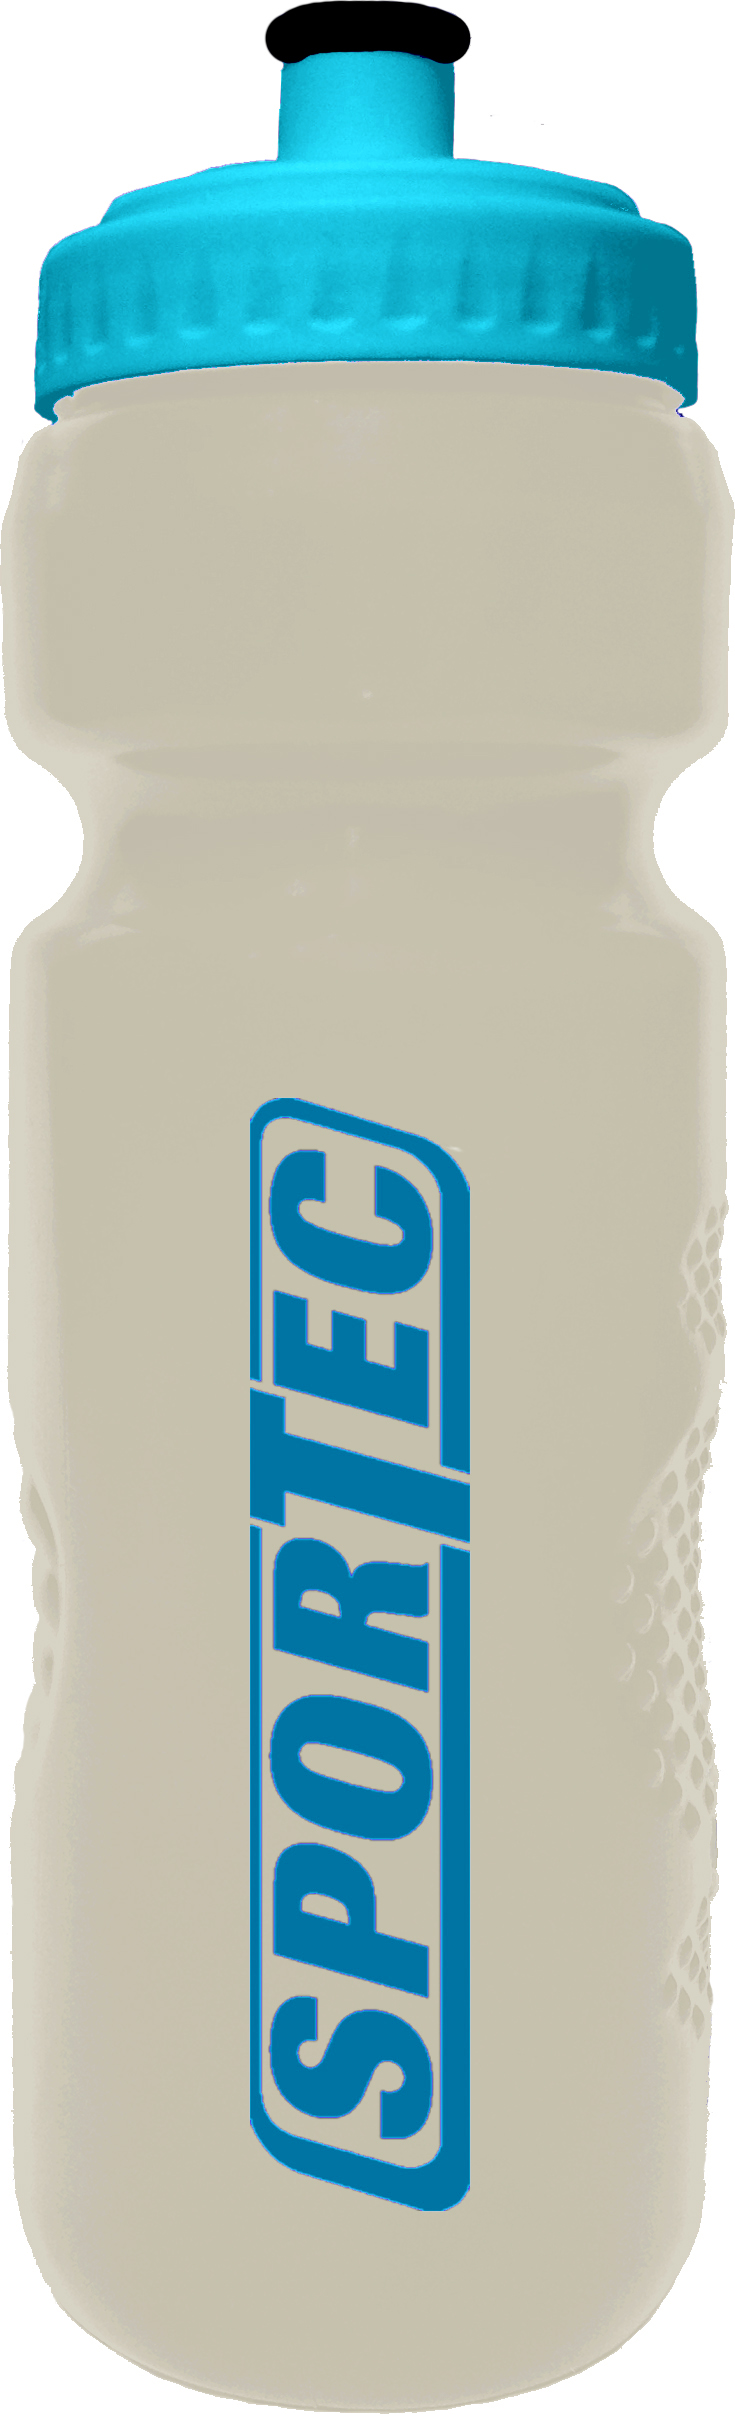 Sportec bidon 2.0 Turquoise - 0,8 liter